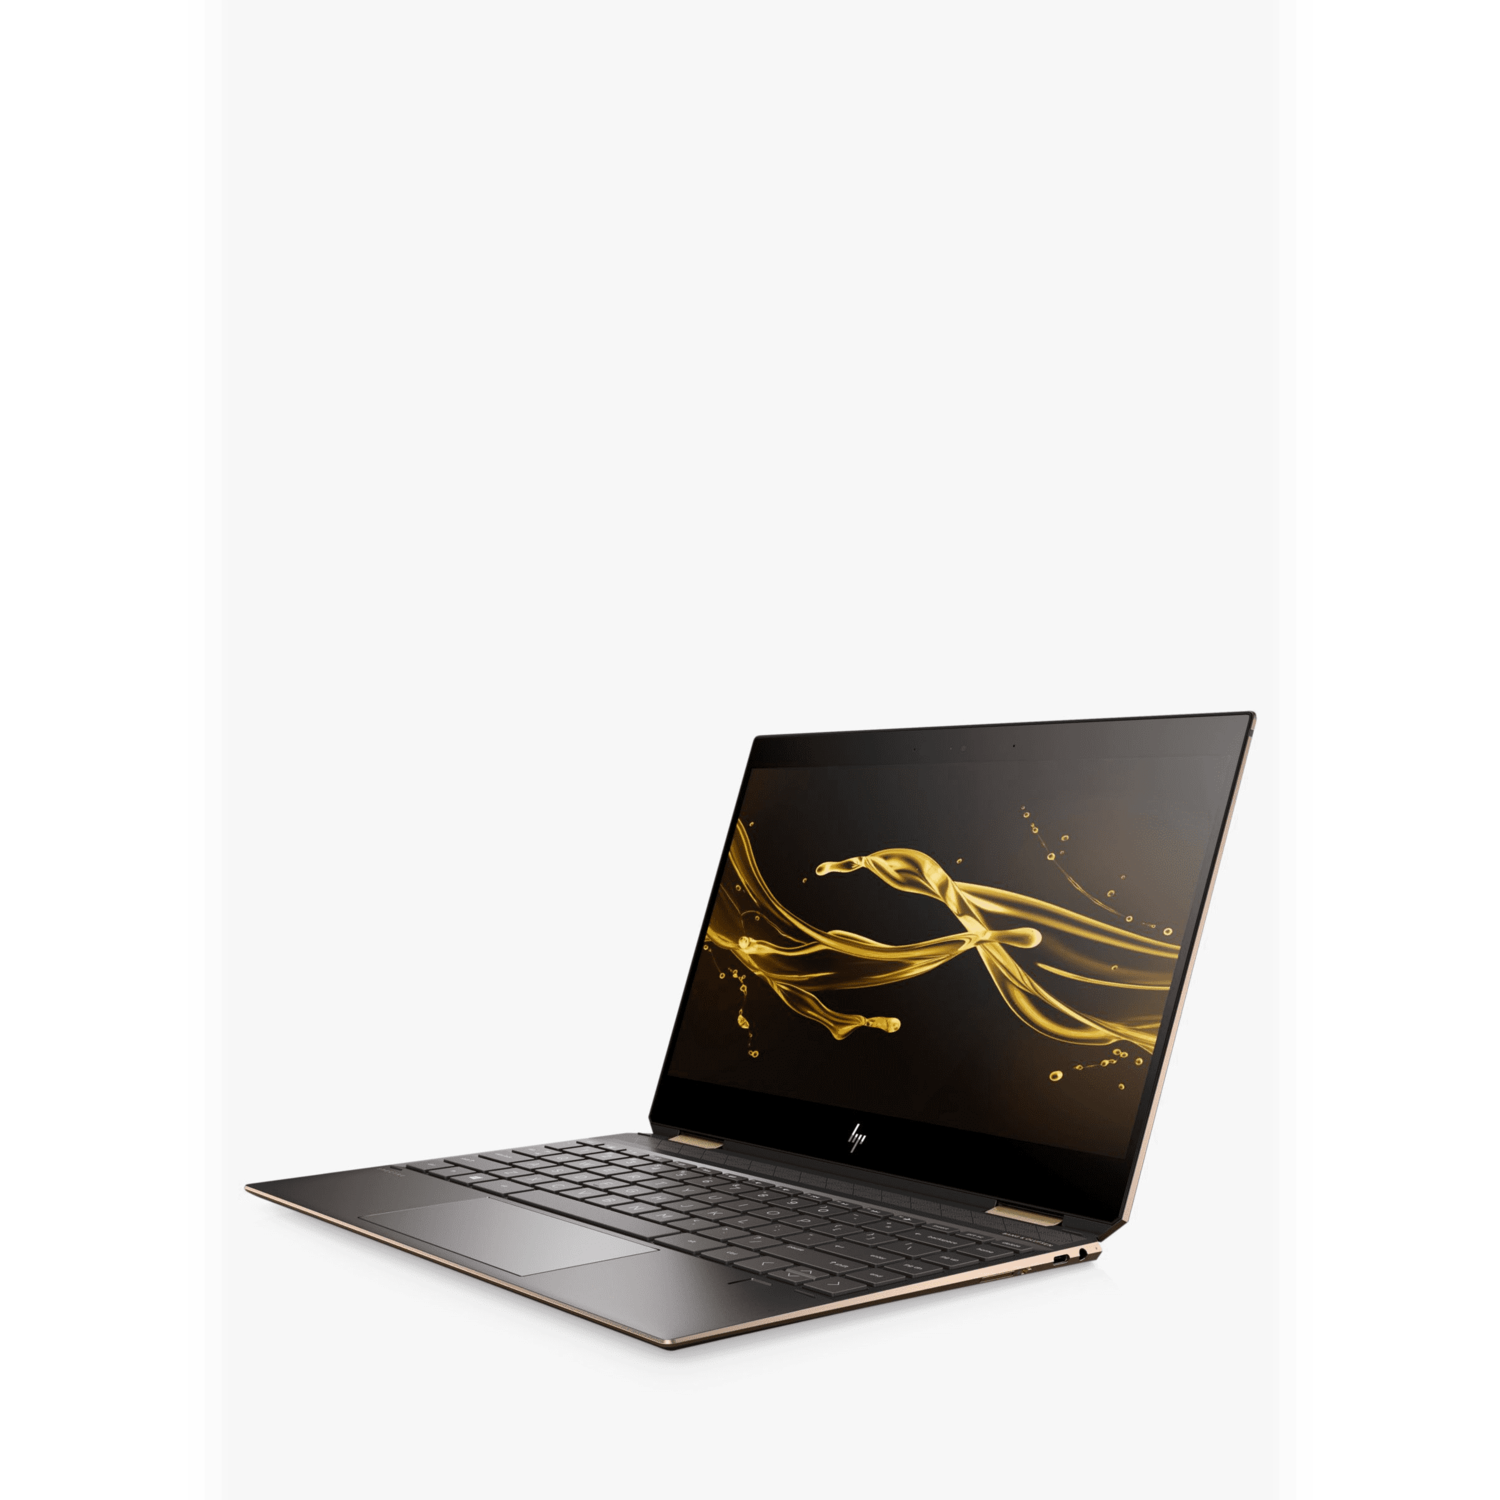 volkan Büyük evren sergi  HP Spectre x360 13-ap0000na Core i5-8265U 8GB 256GB SSD 13.3 Inch FHD  Touchscreen Windows 10 Convertible Laptop - Laptops Direct